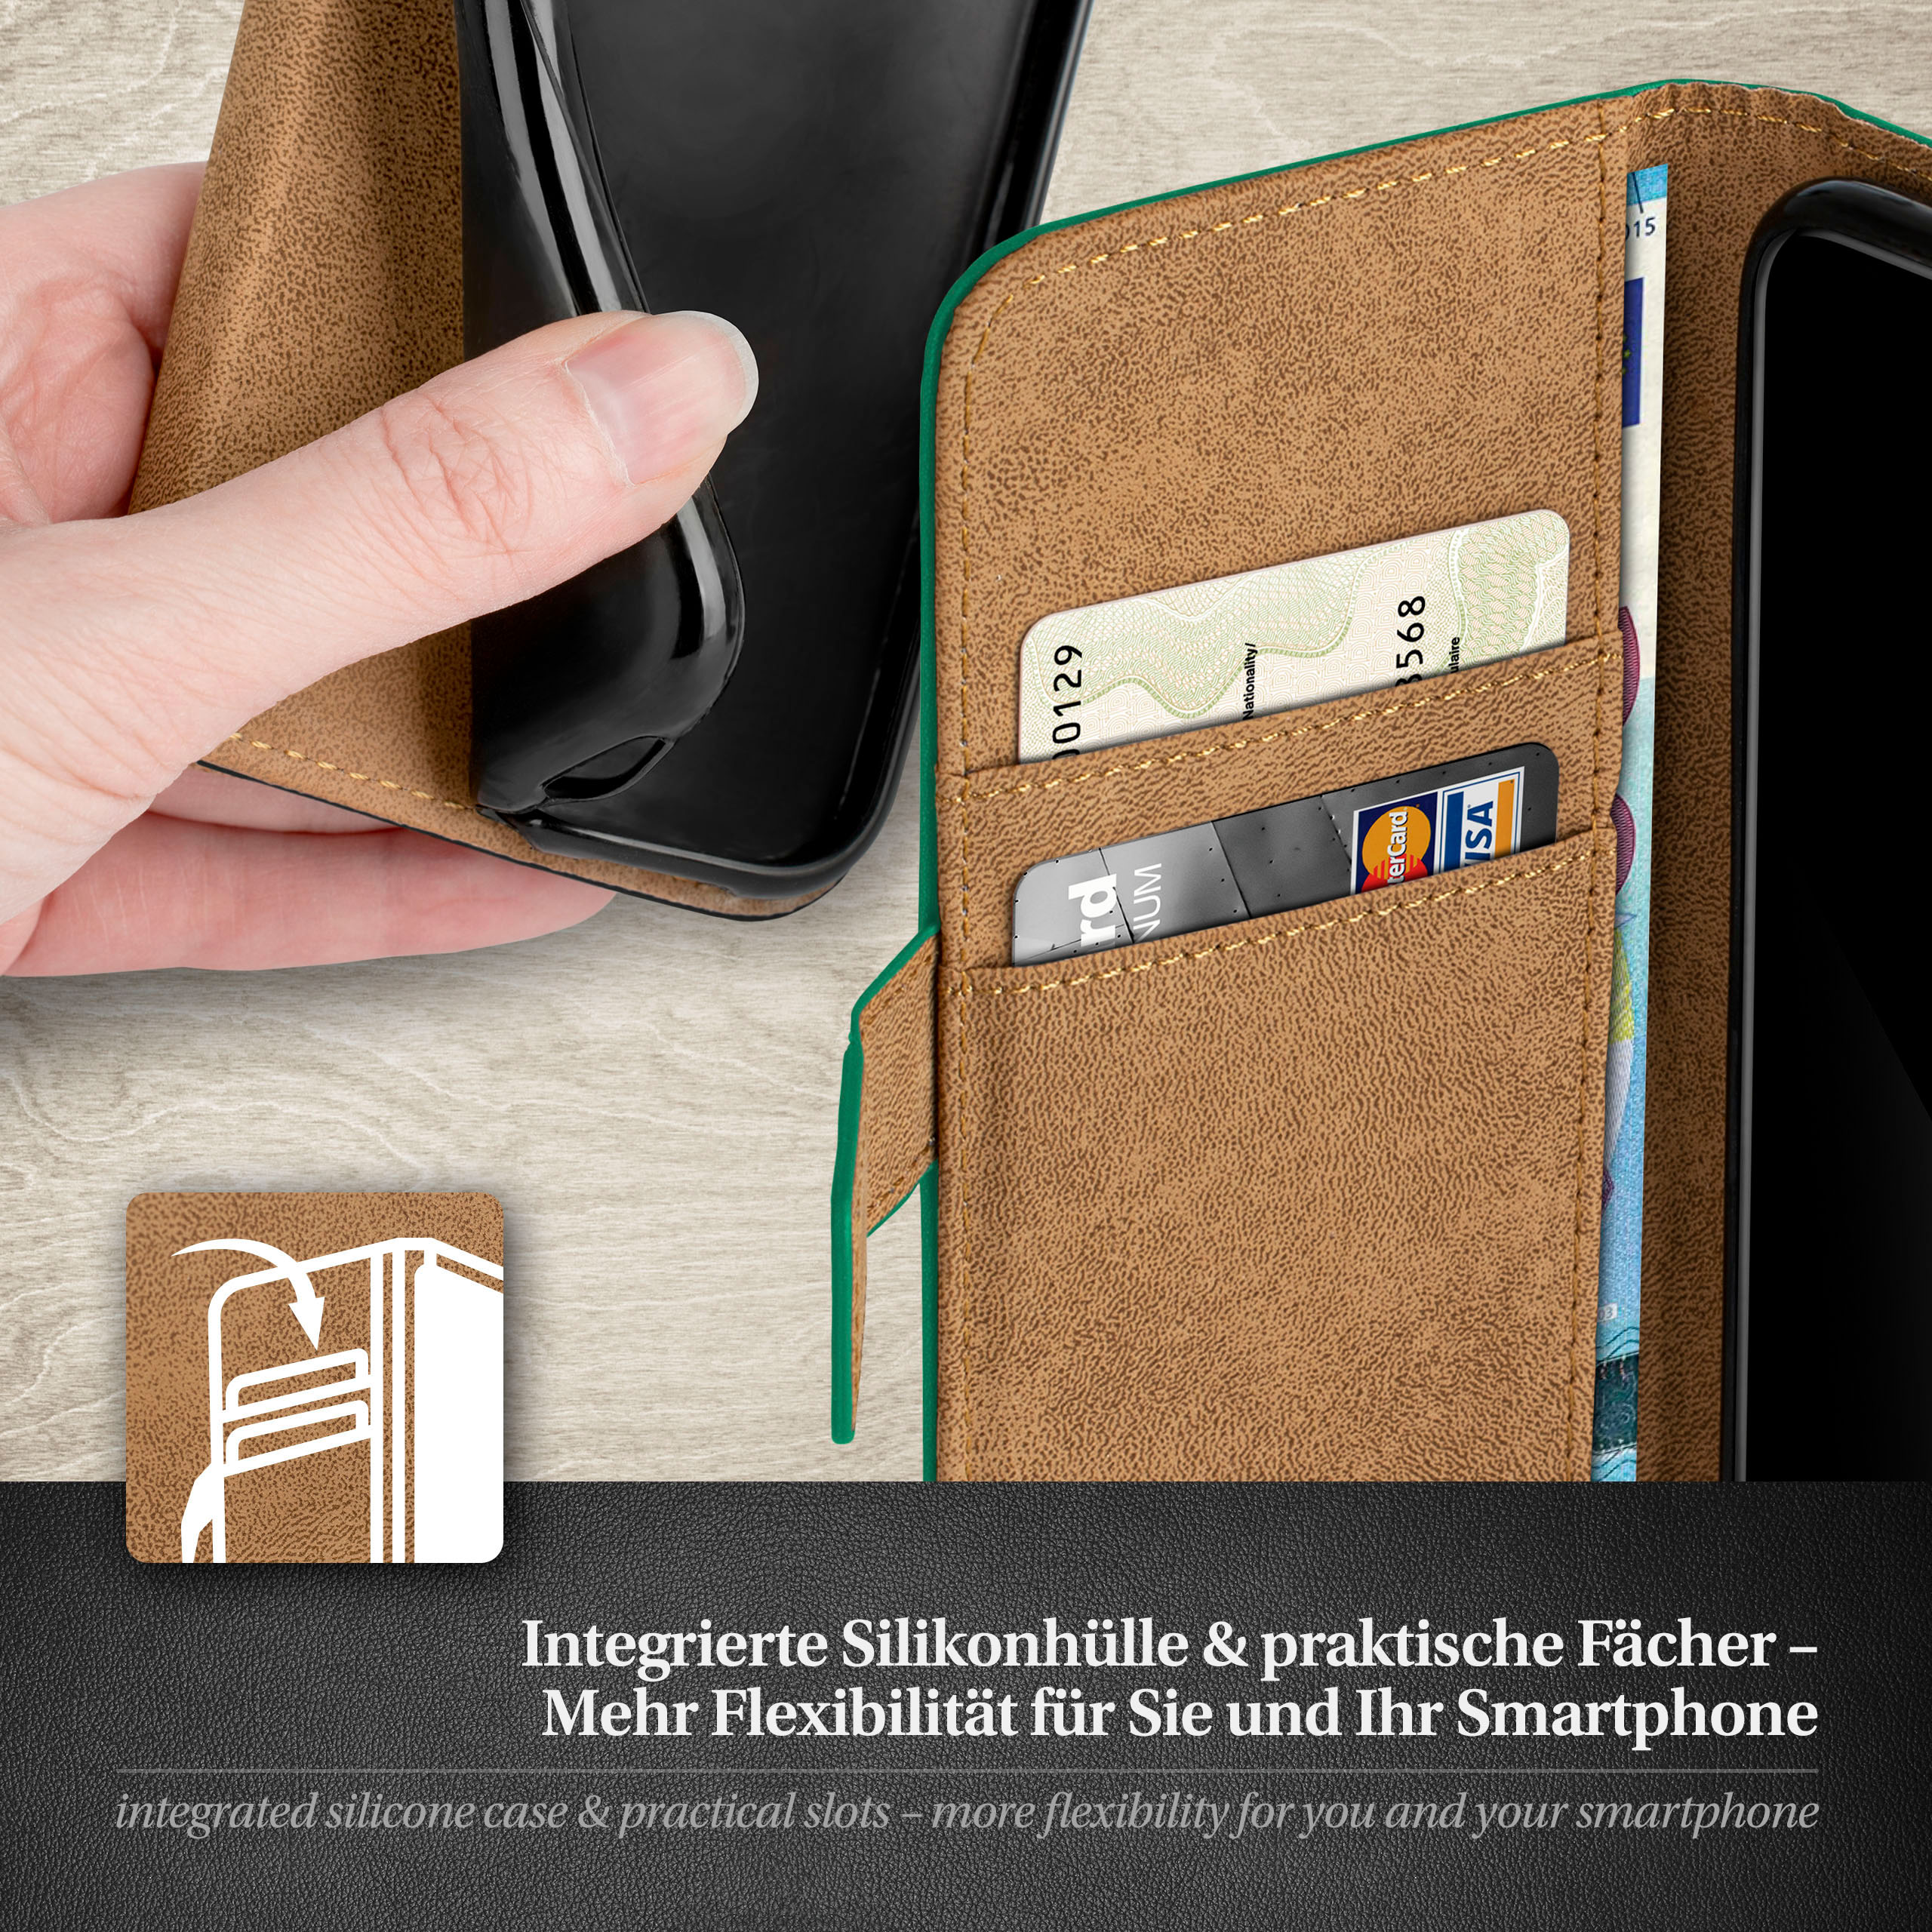 Book Mini, Galaxy MOEX Case, Samsung, Emerald-Green Bookcover, S5